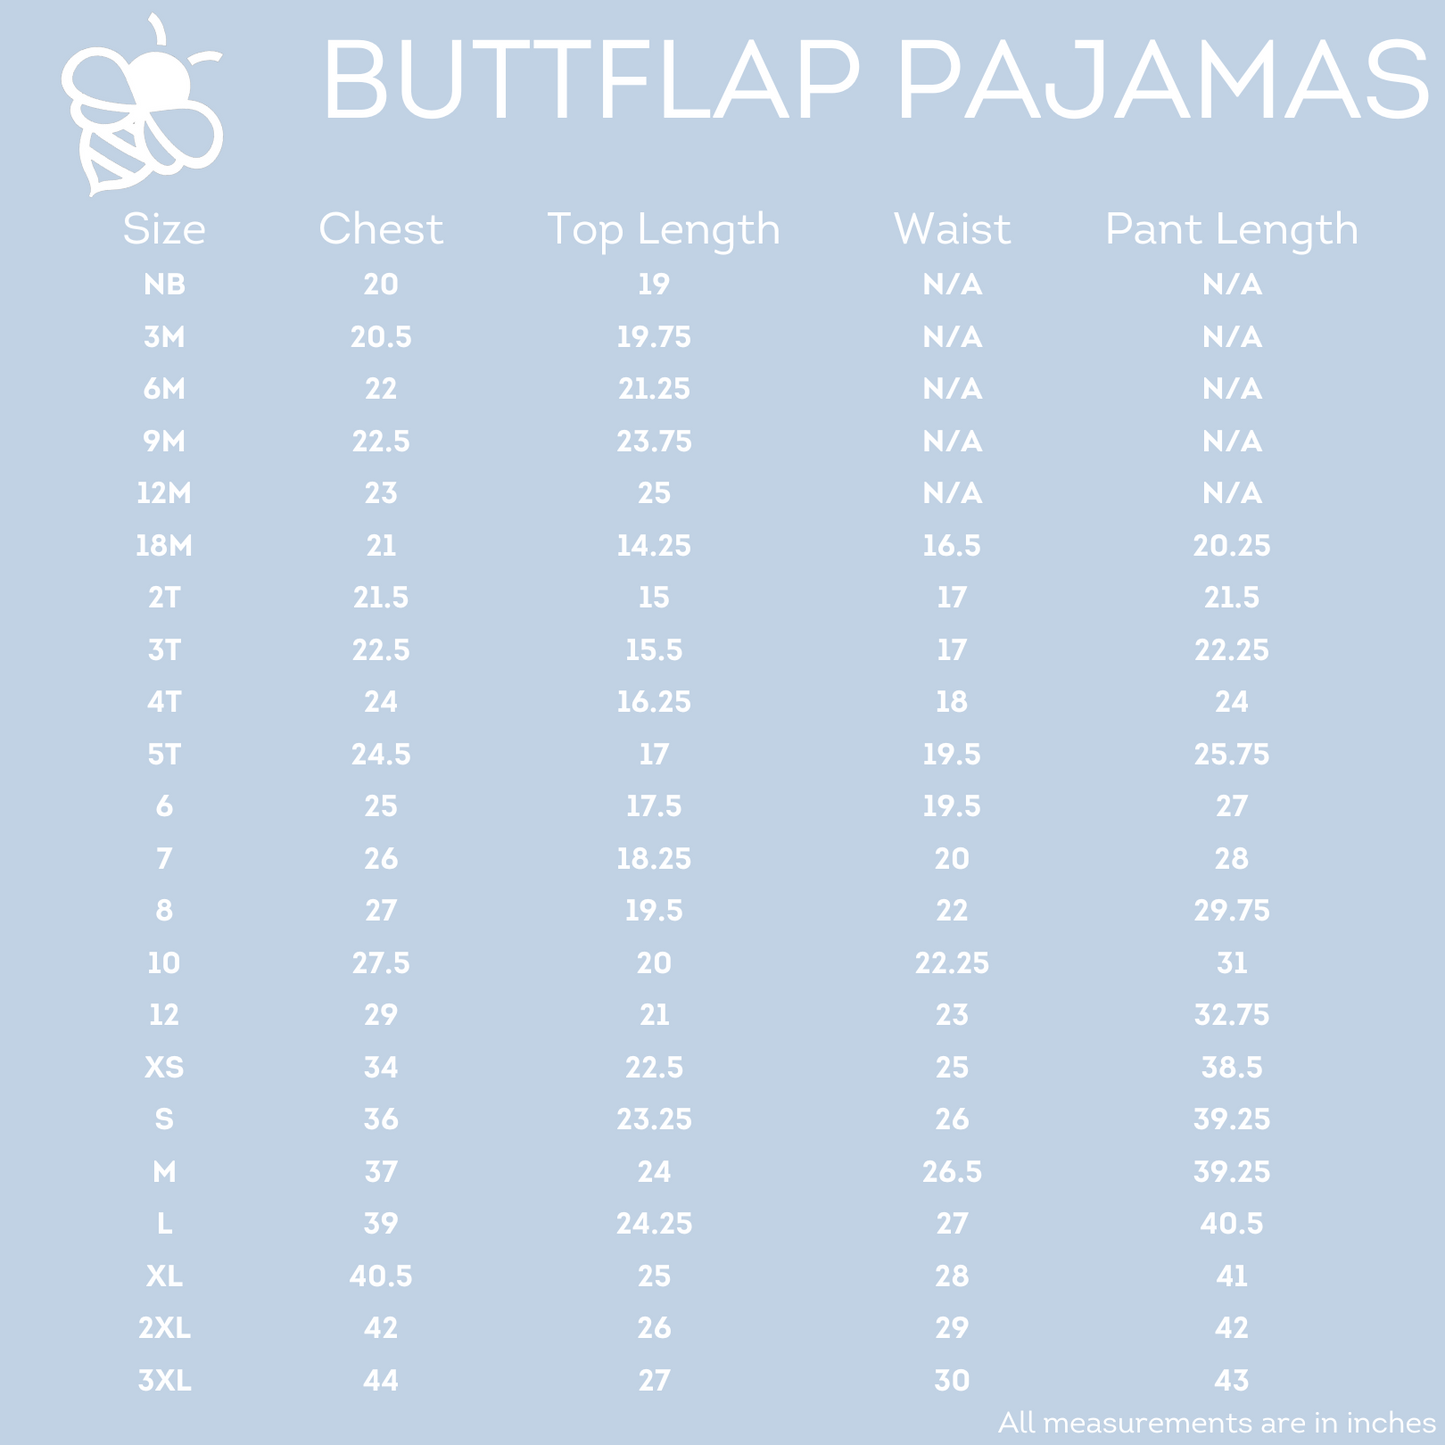 Holly Pattern - Ruffle Buttflap PJs